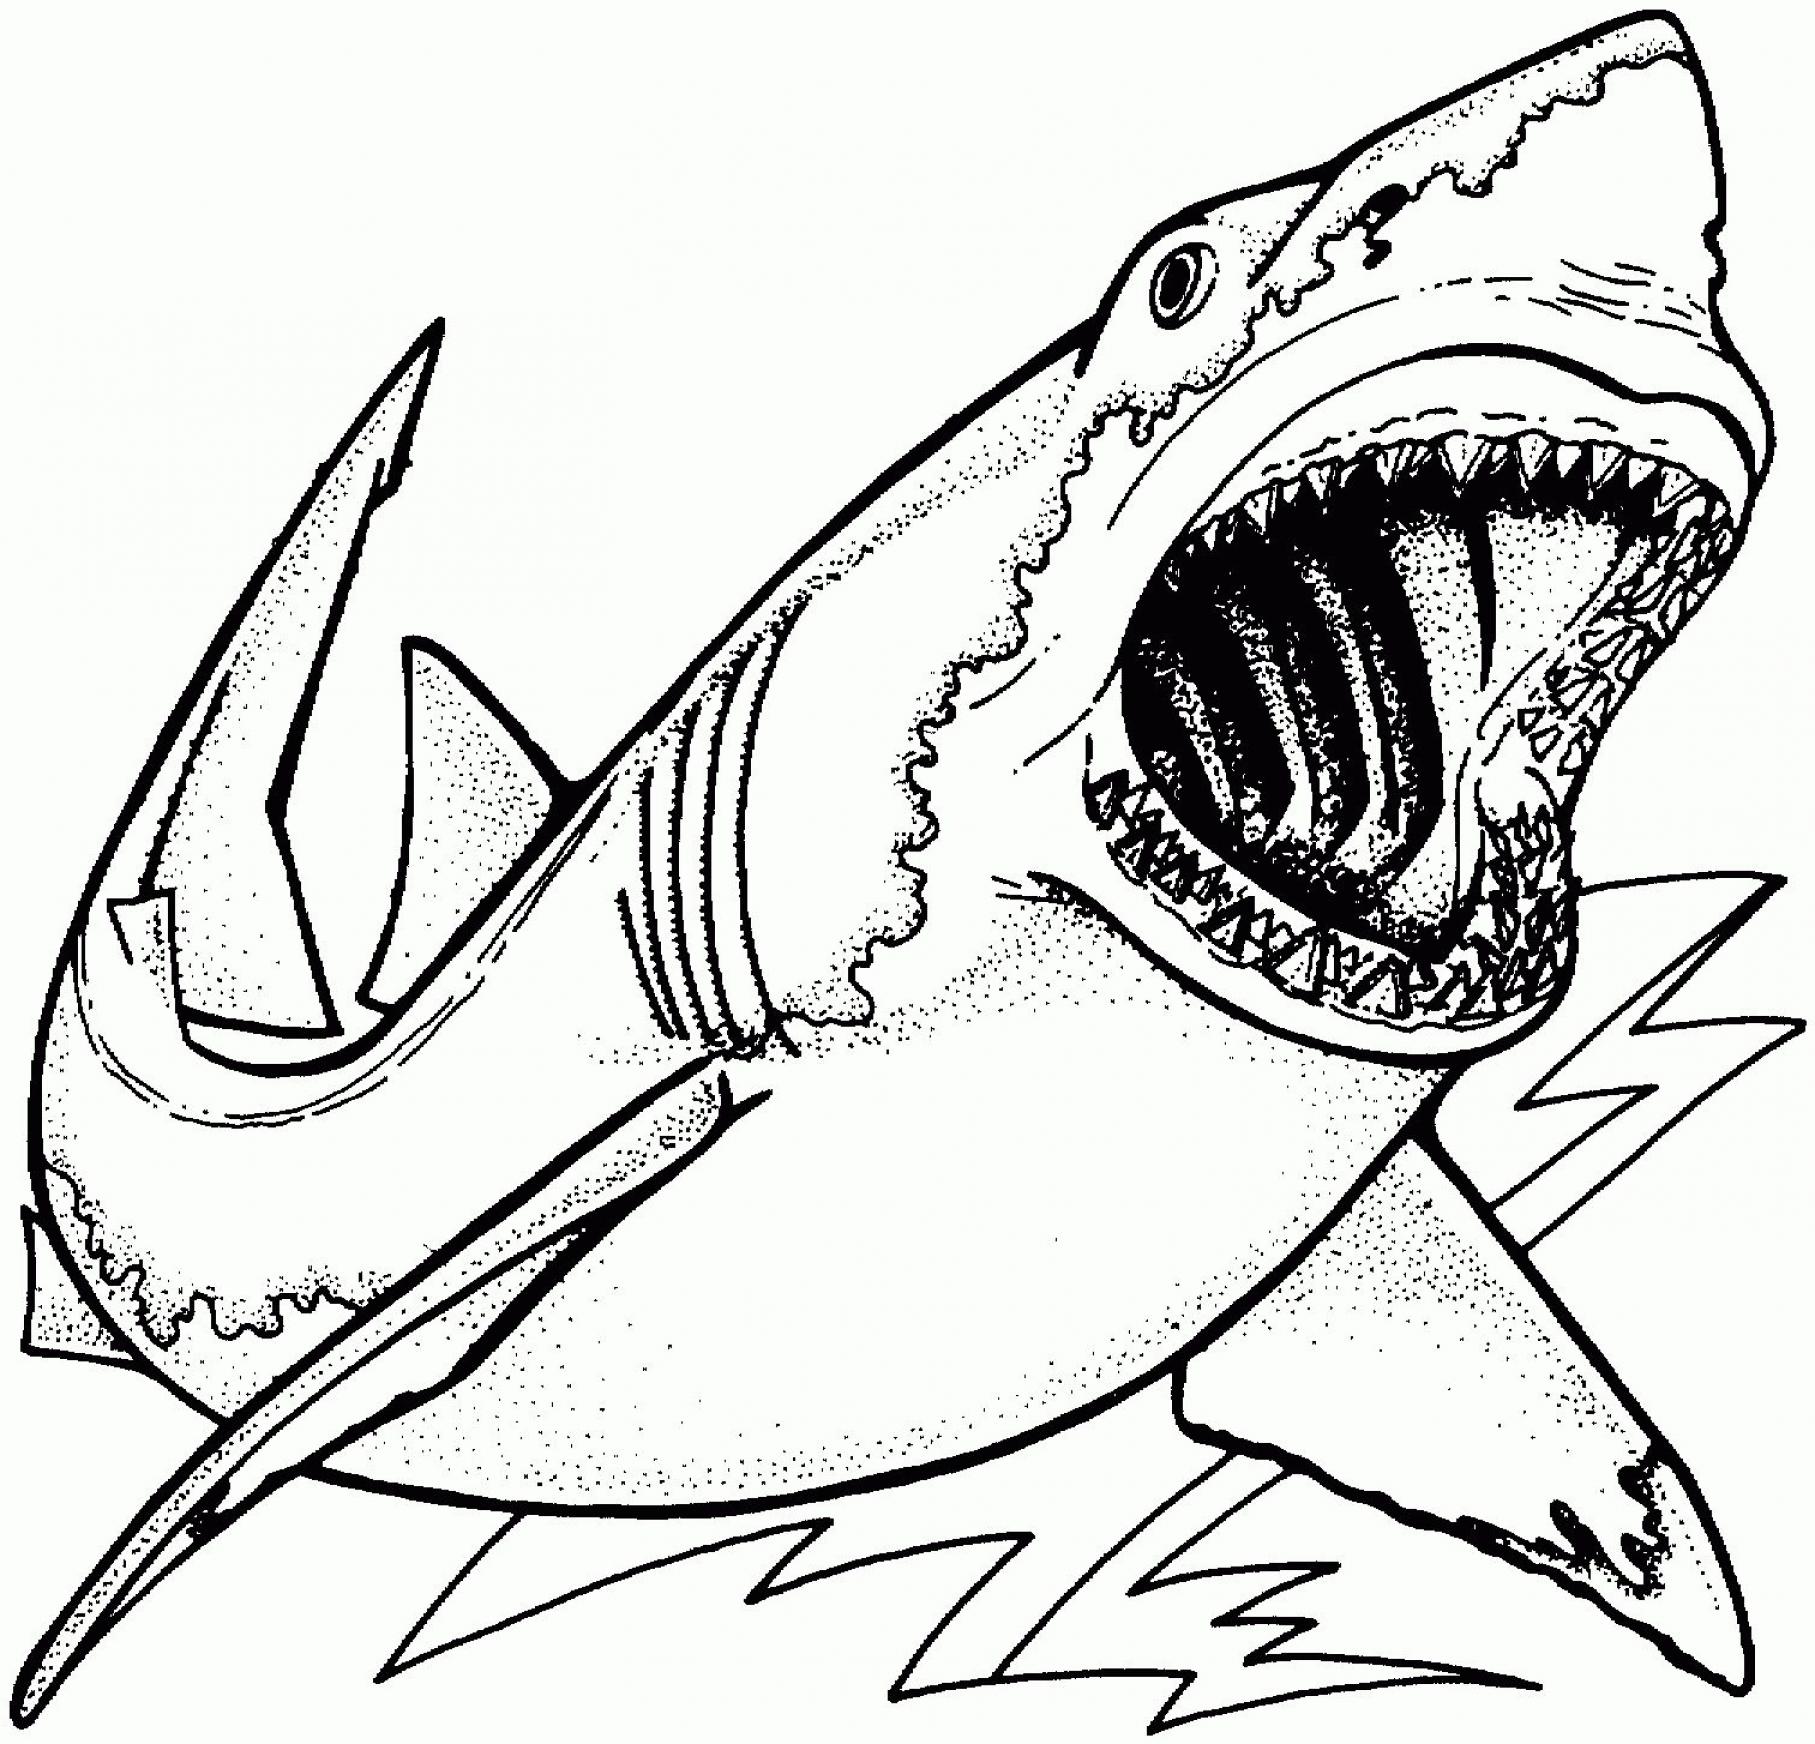 Shark Coloring Pages PDF Printable - Coloringfolder.com | Shark ...